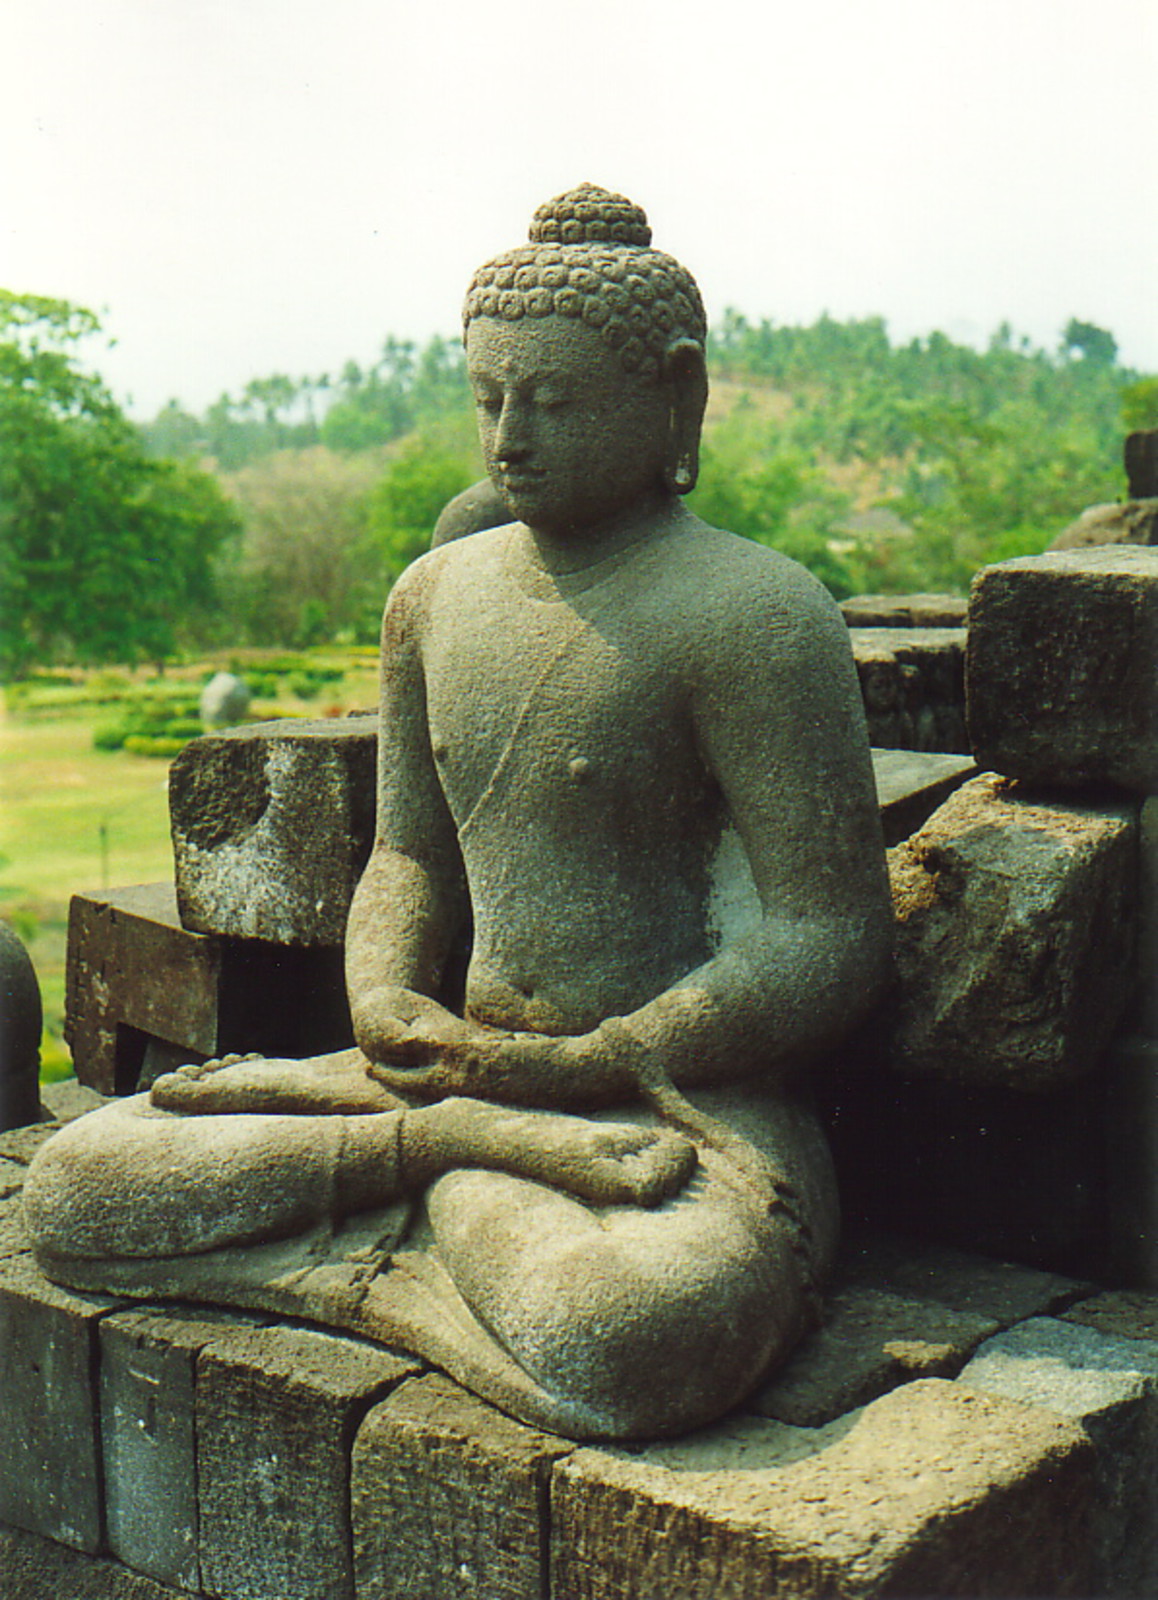 A contemplative Buddha at Borobudur